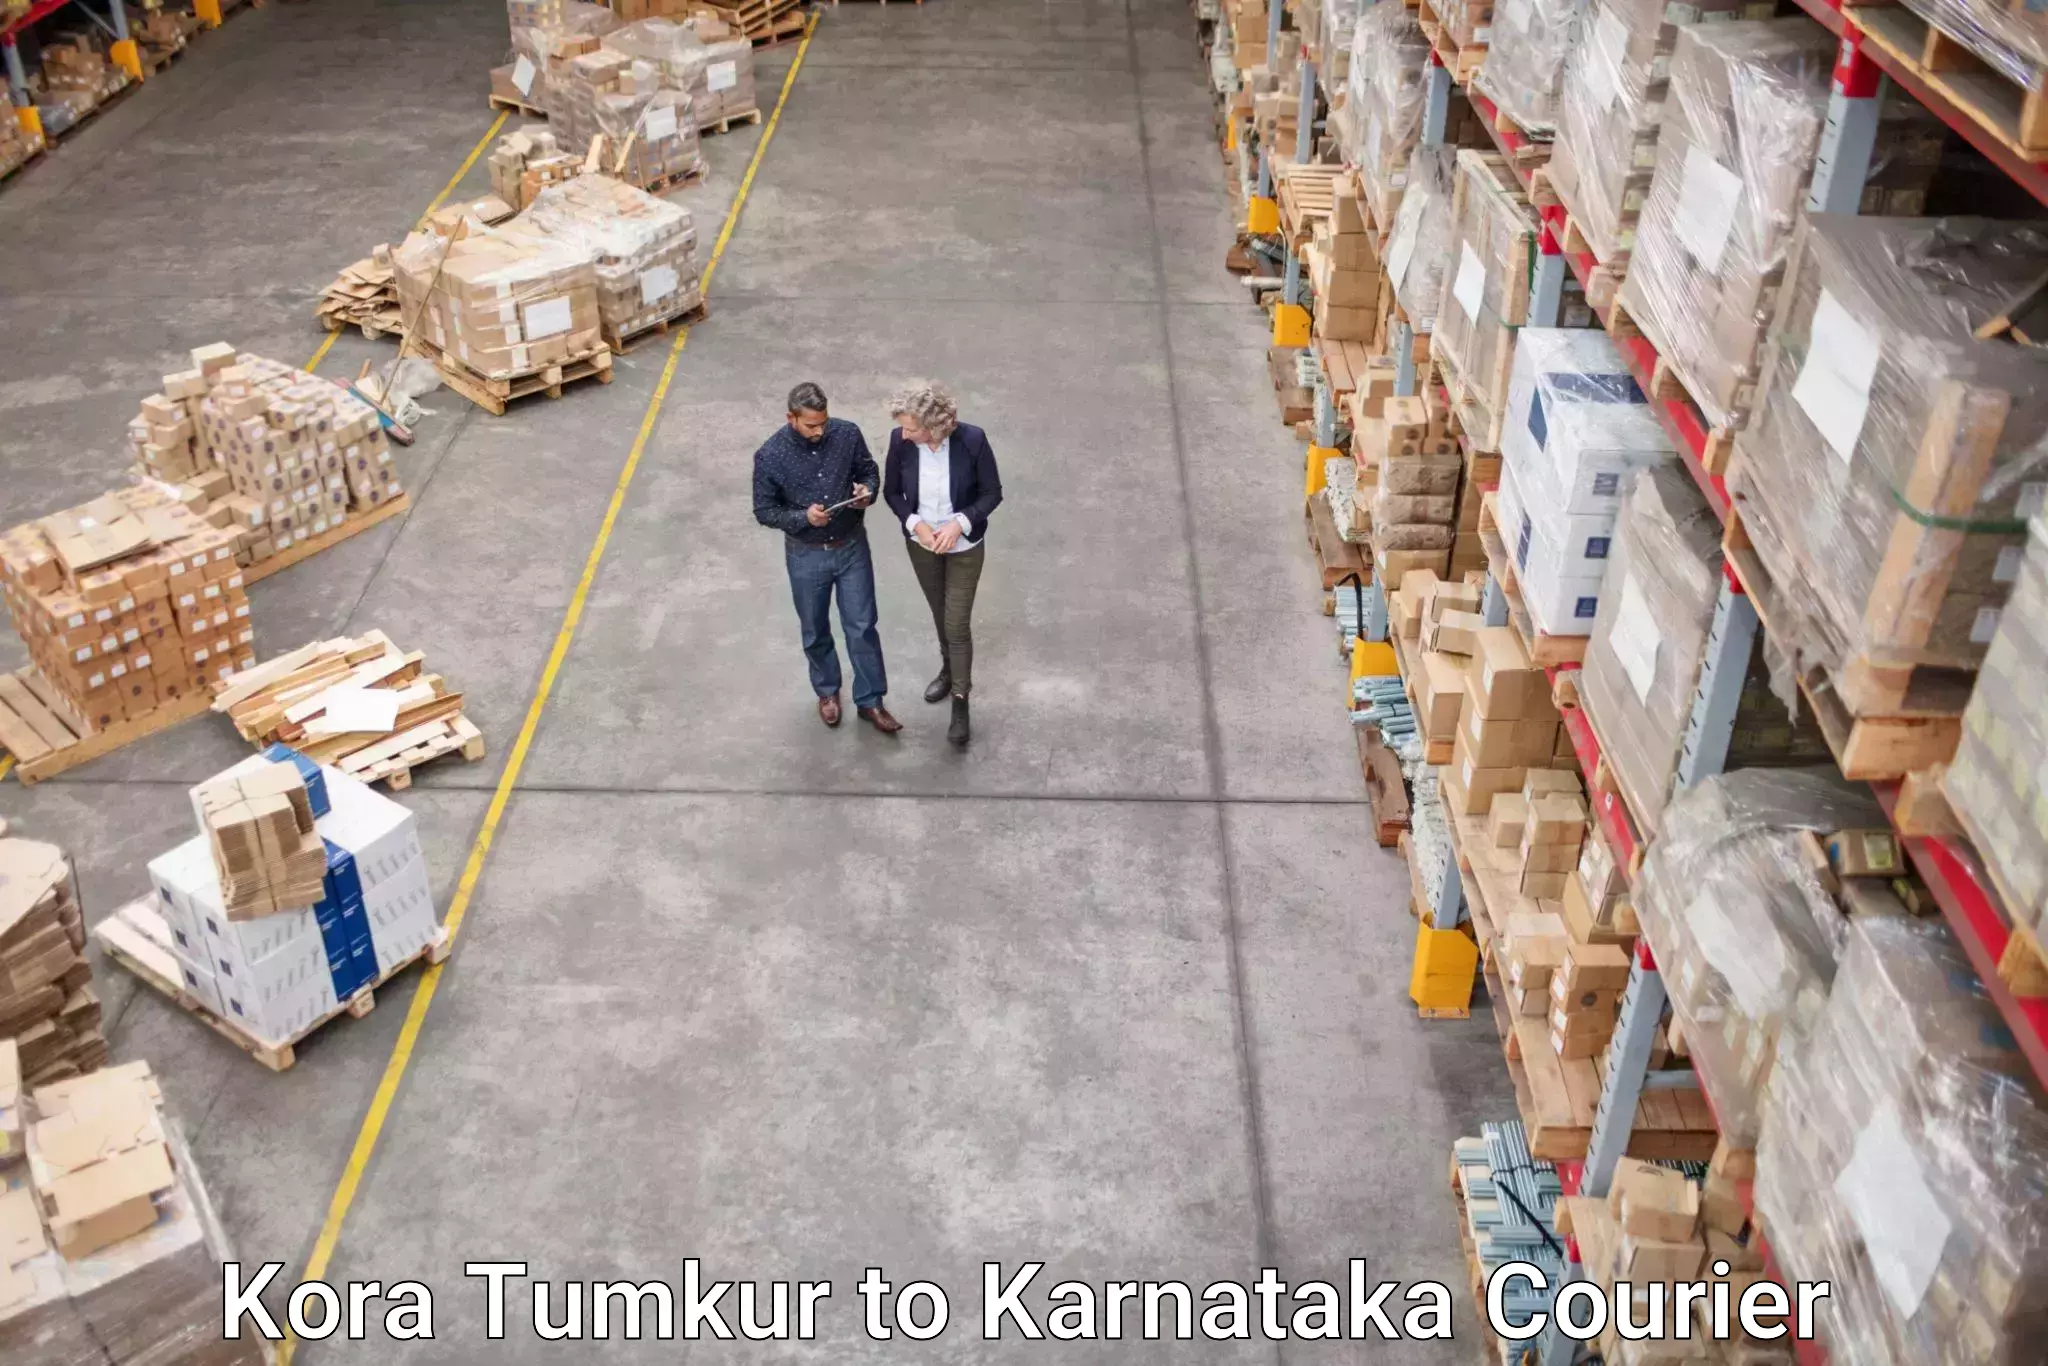 Reliable courier service Kora Tumkur to Karnataka